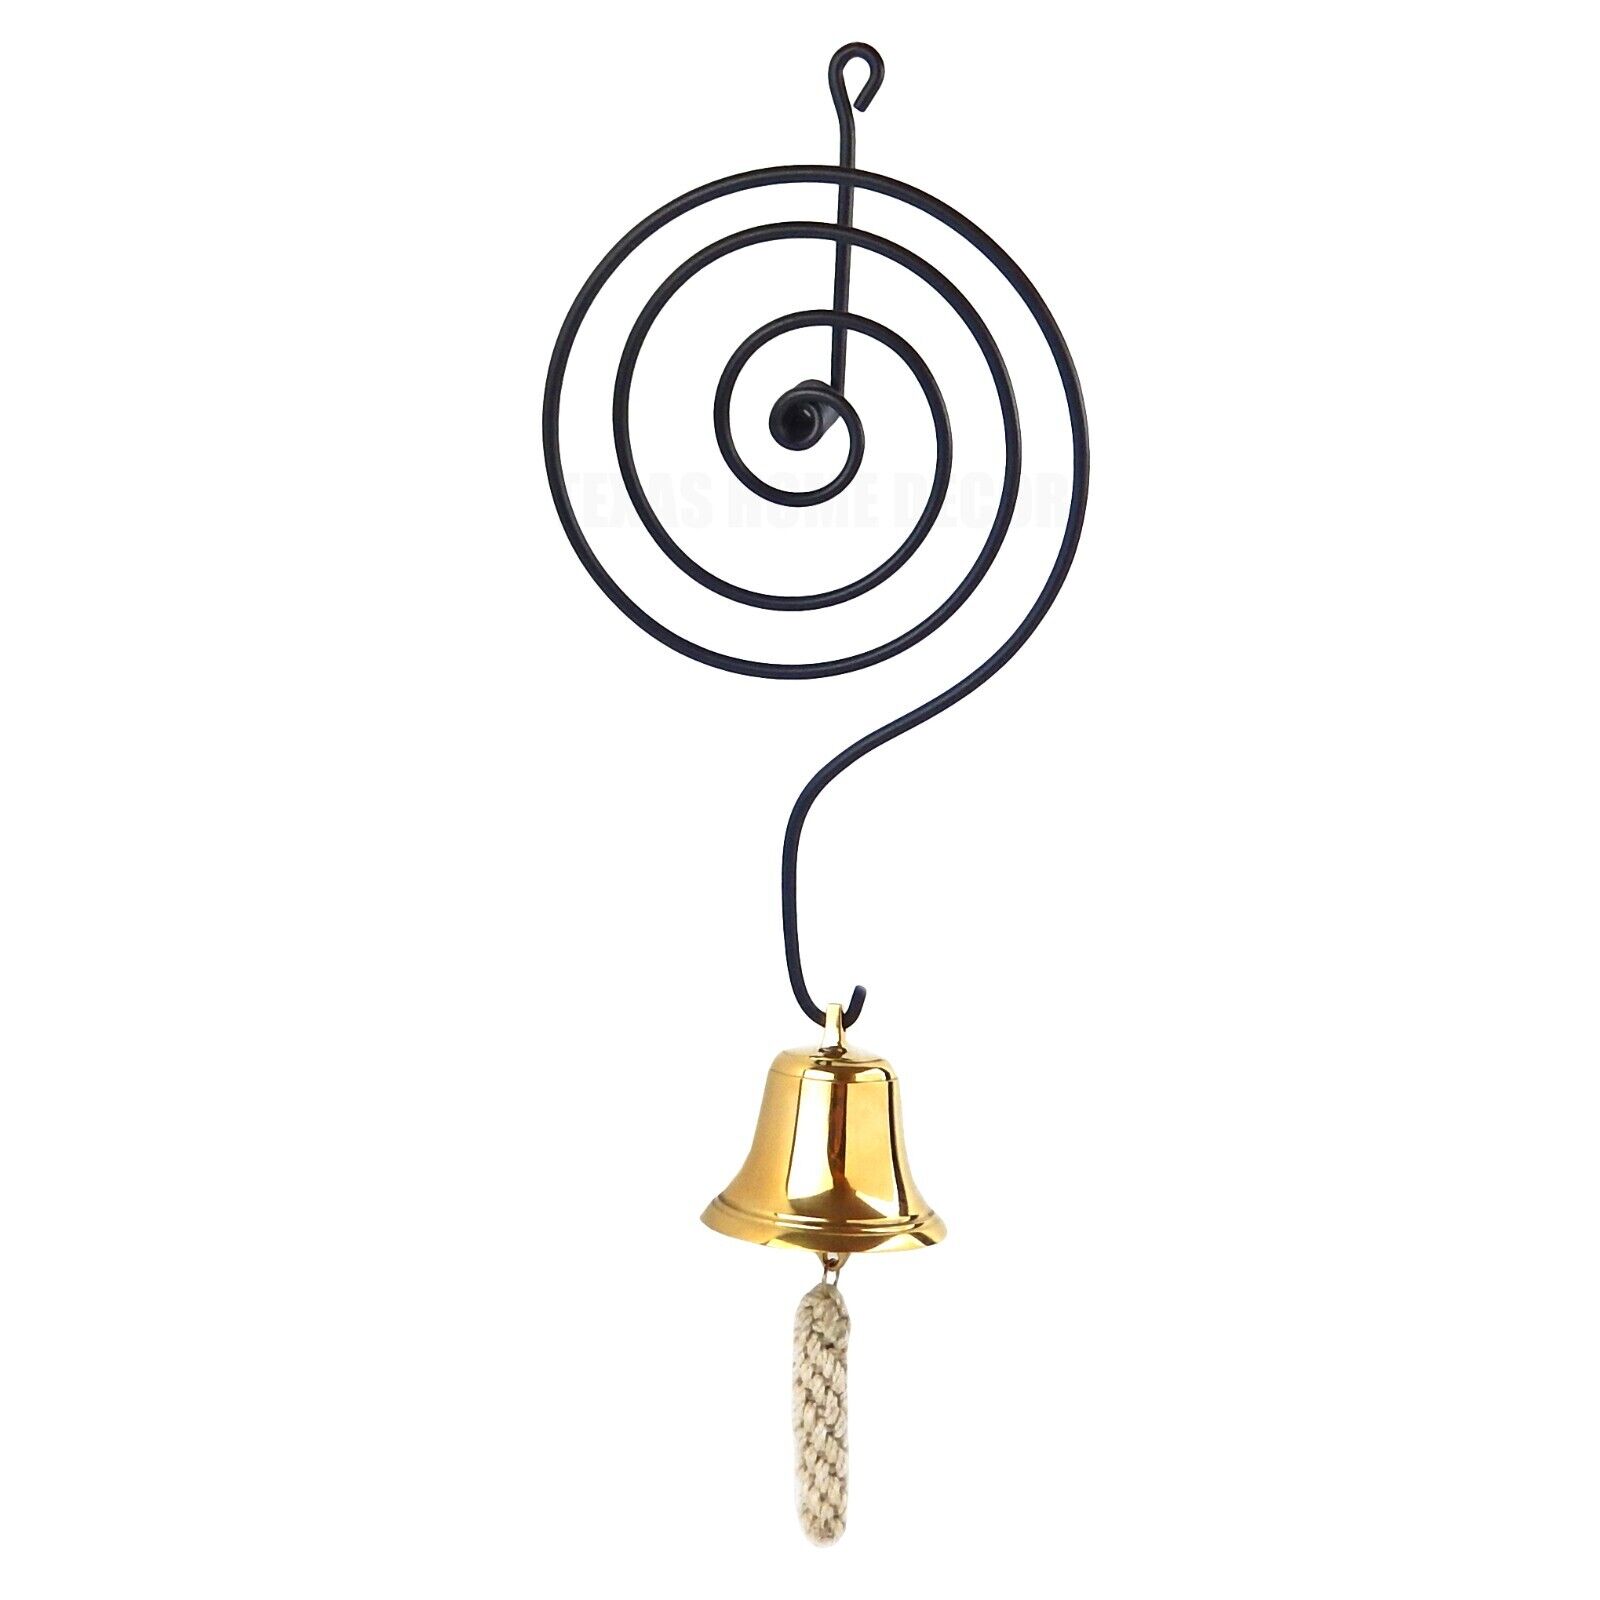 Brass Retail Store Shopkeepers' Door Entry Bell Spiral Metal Loop Antique Style